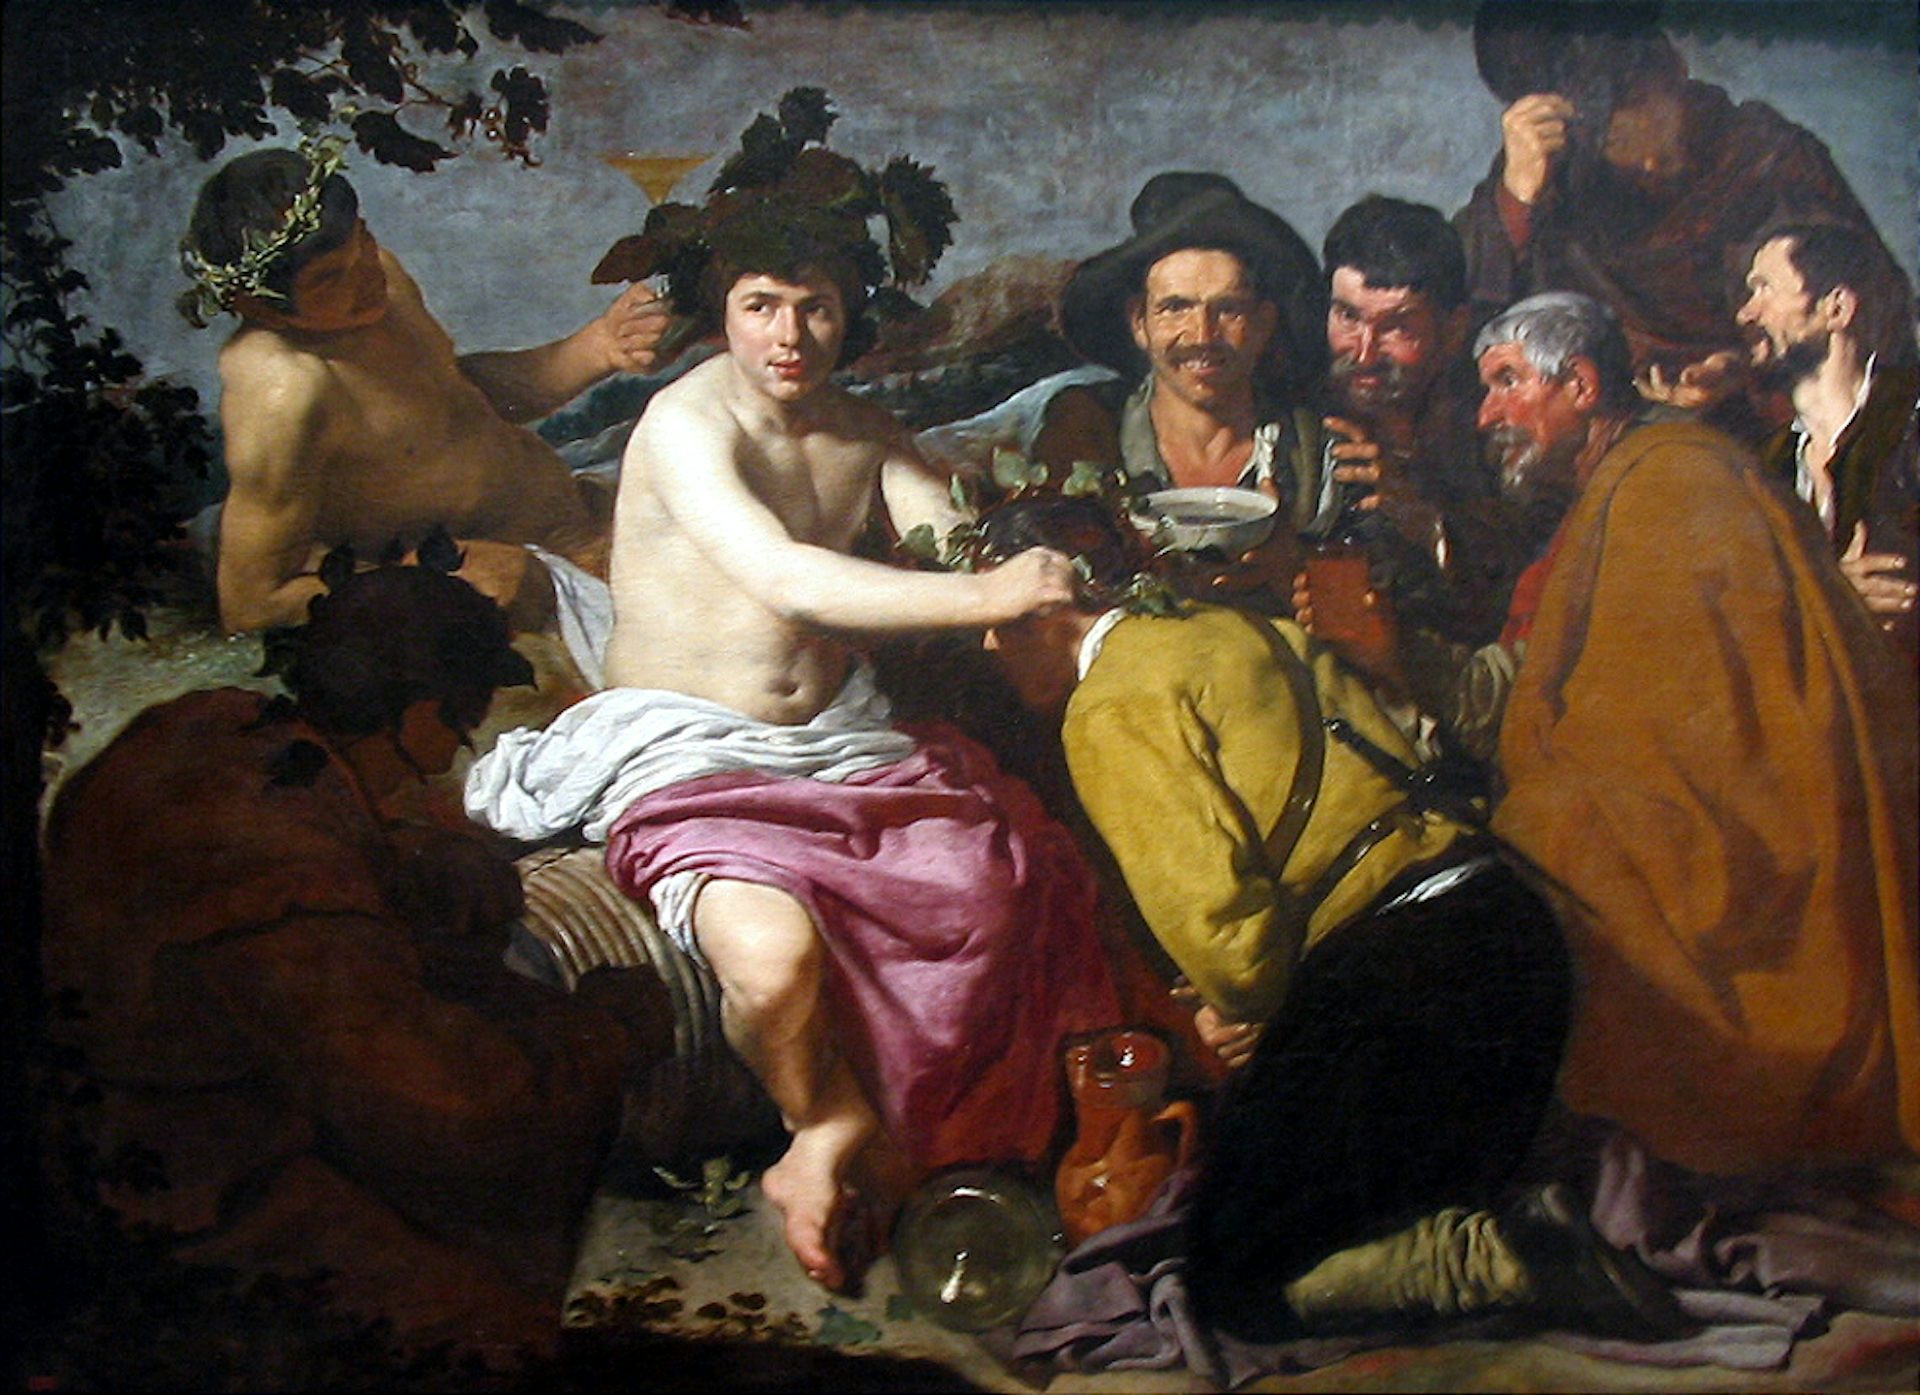 The Triumph of Bacchus by Diego Velázquez